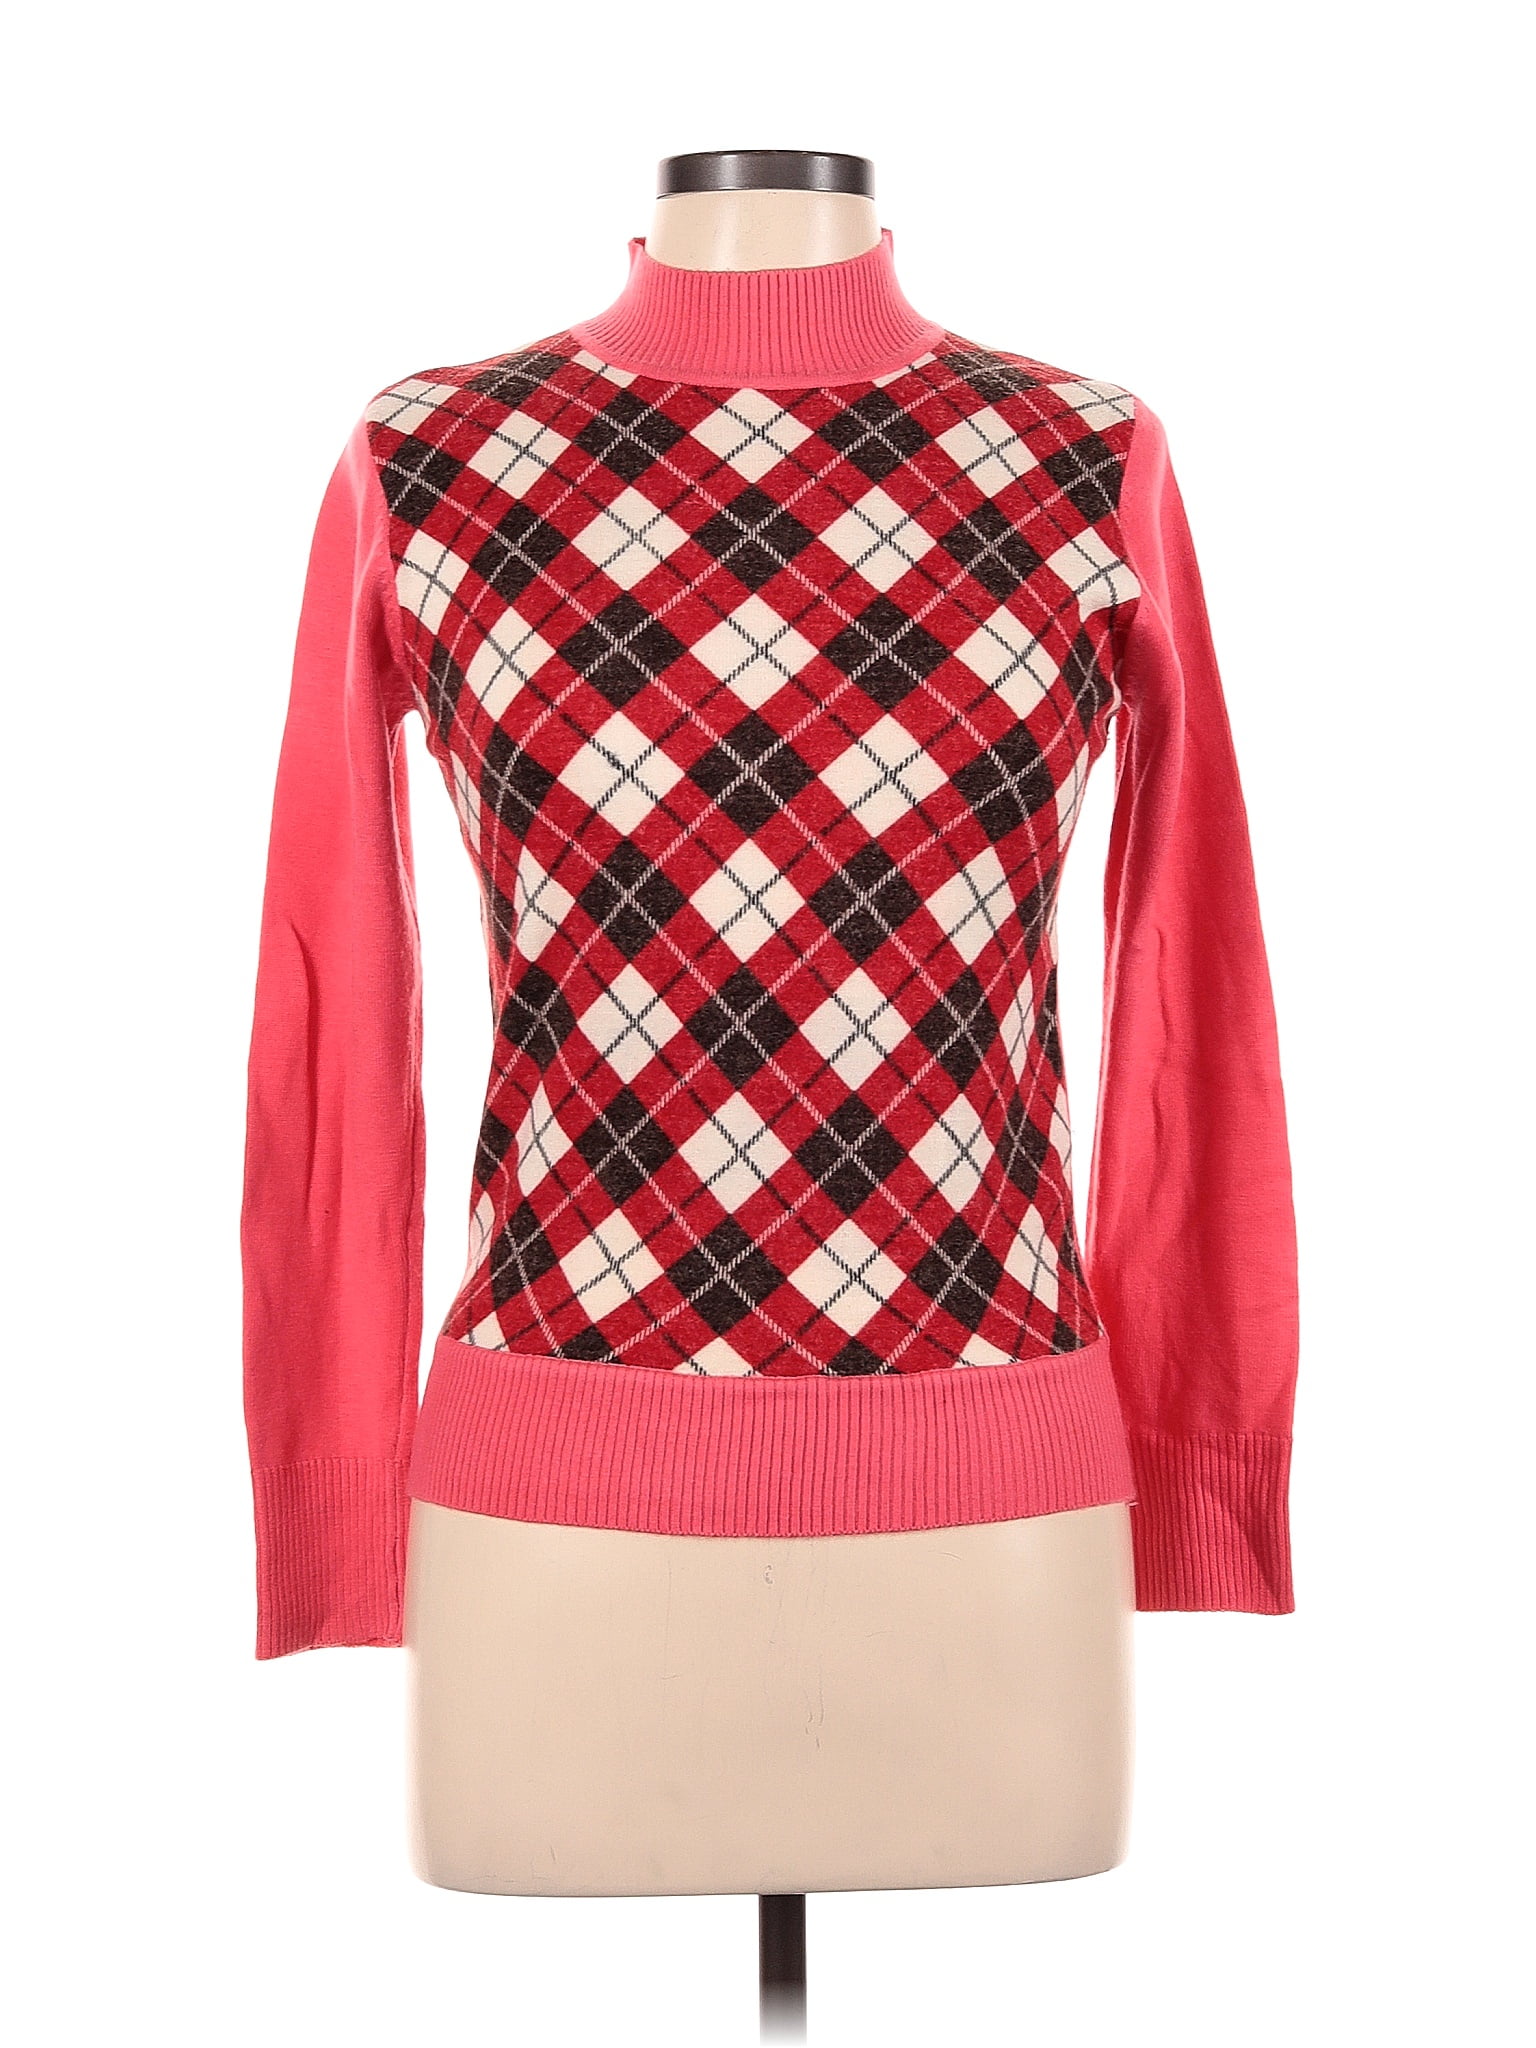 Cable & Gauge Color Block Plaid Red Turtleneck Sweater Size M - 52